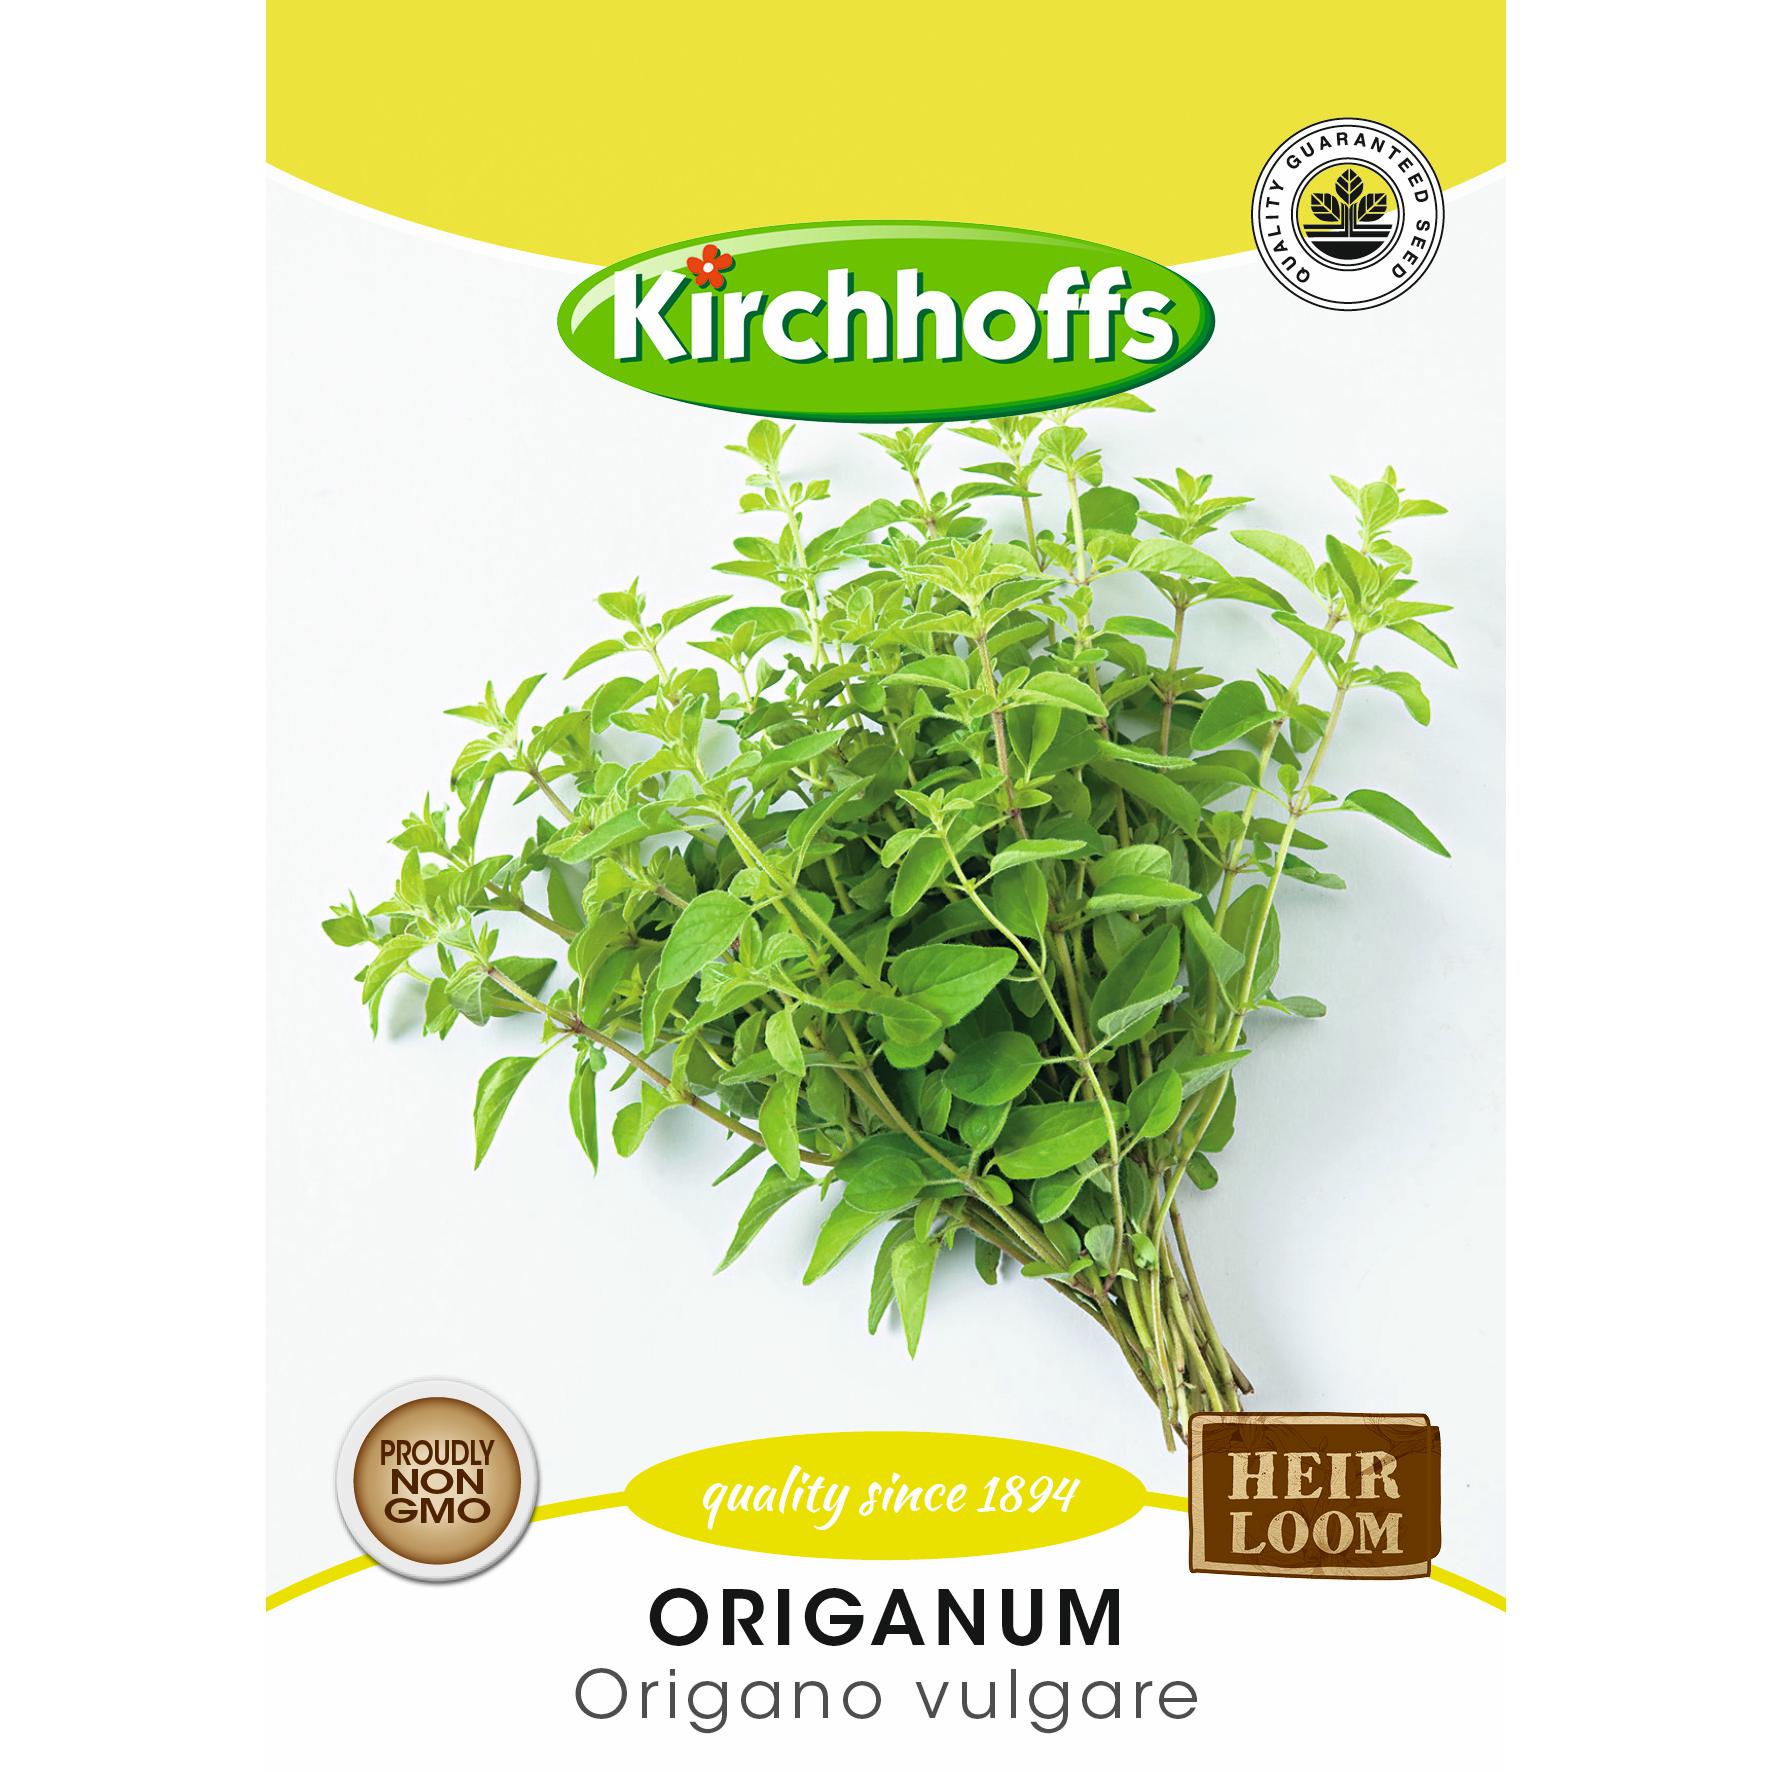 Herb Seed Origanum Kirchhoffs-Seeds-Kirchhoffs-Oregano Vulgare-Picture Packet-diyshop.co.za